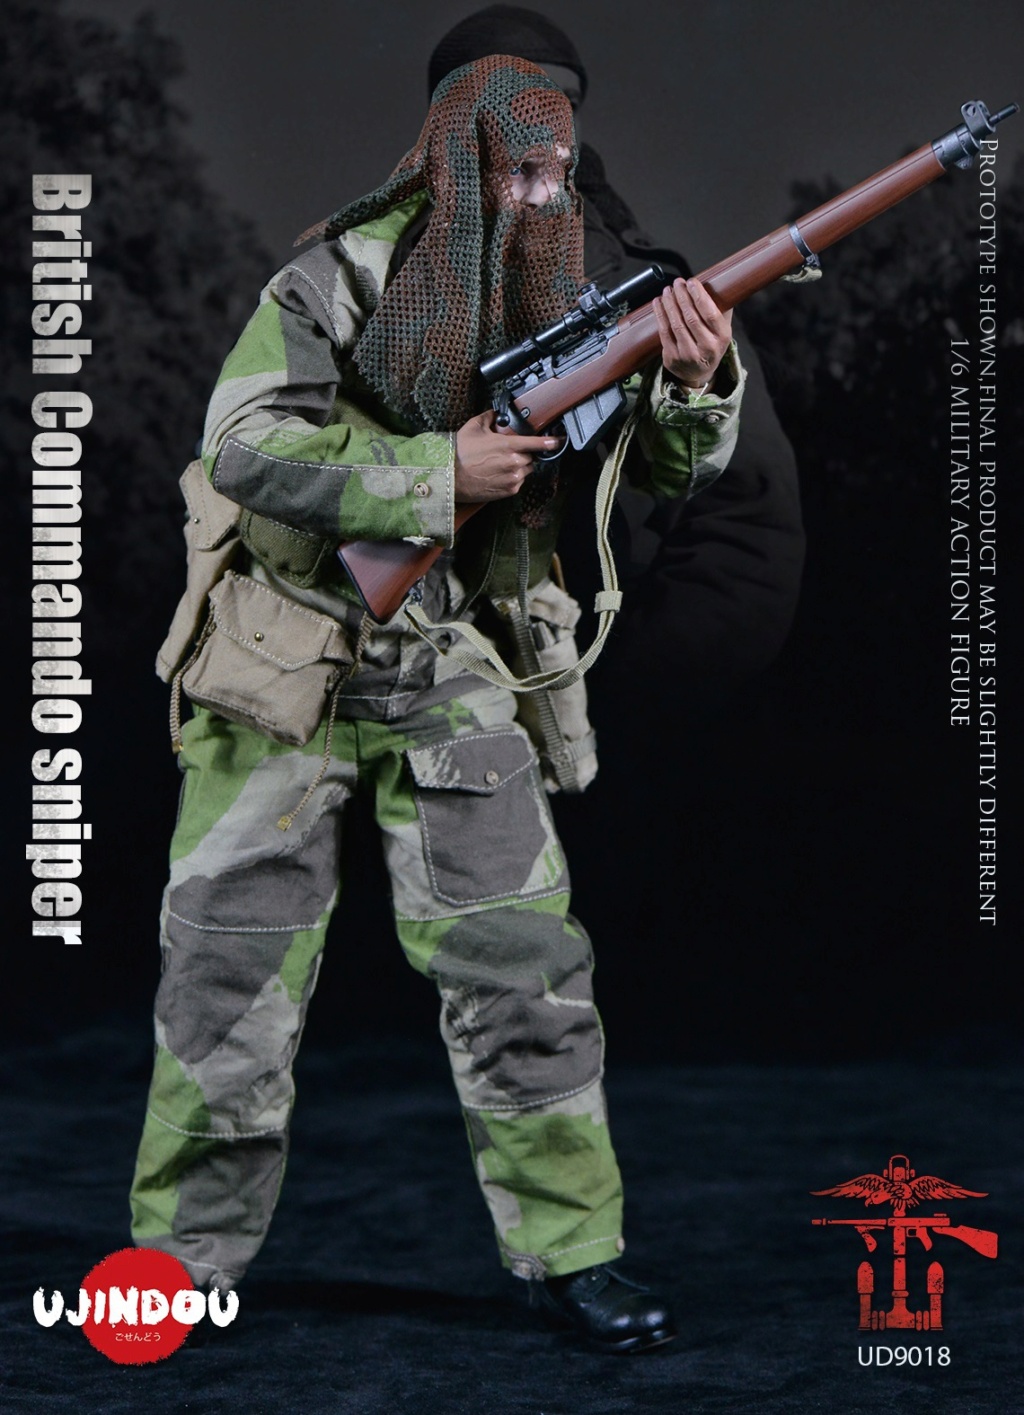 CommandoSniper - NEW PRODUCT: UJINDOU: UD9018 1/6 Scale WWII British Commando Sniper 1944 13490410